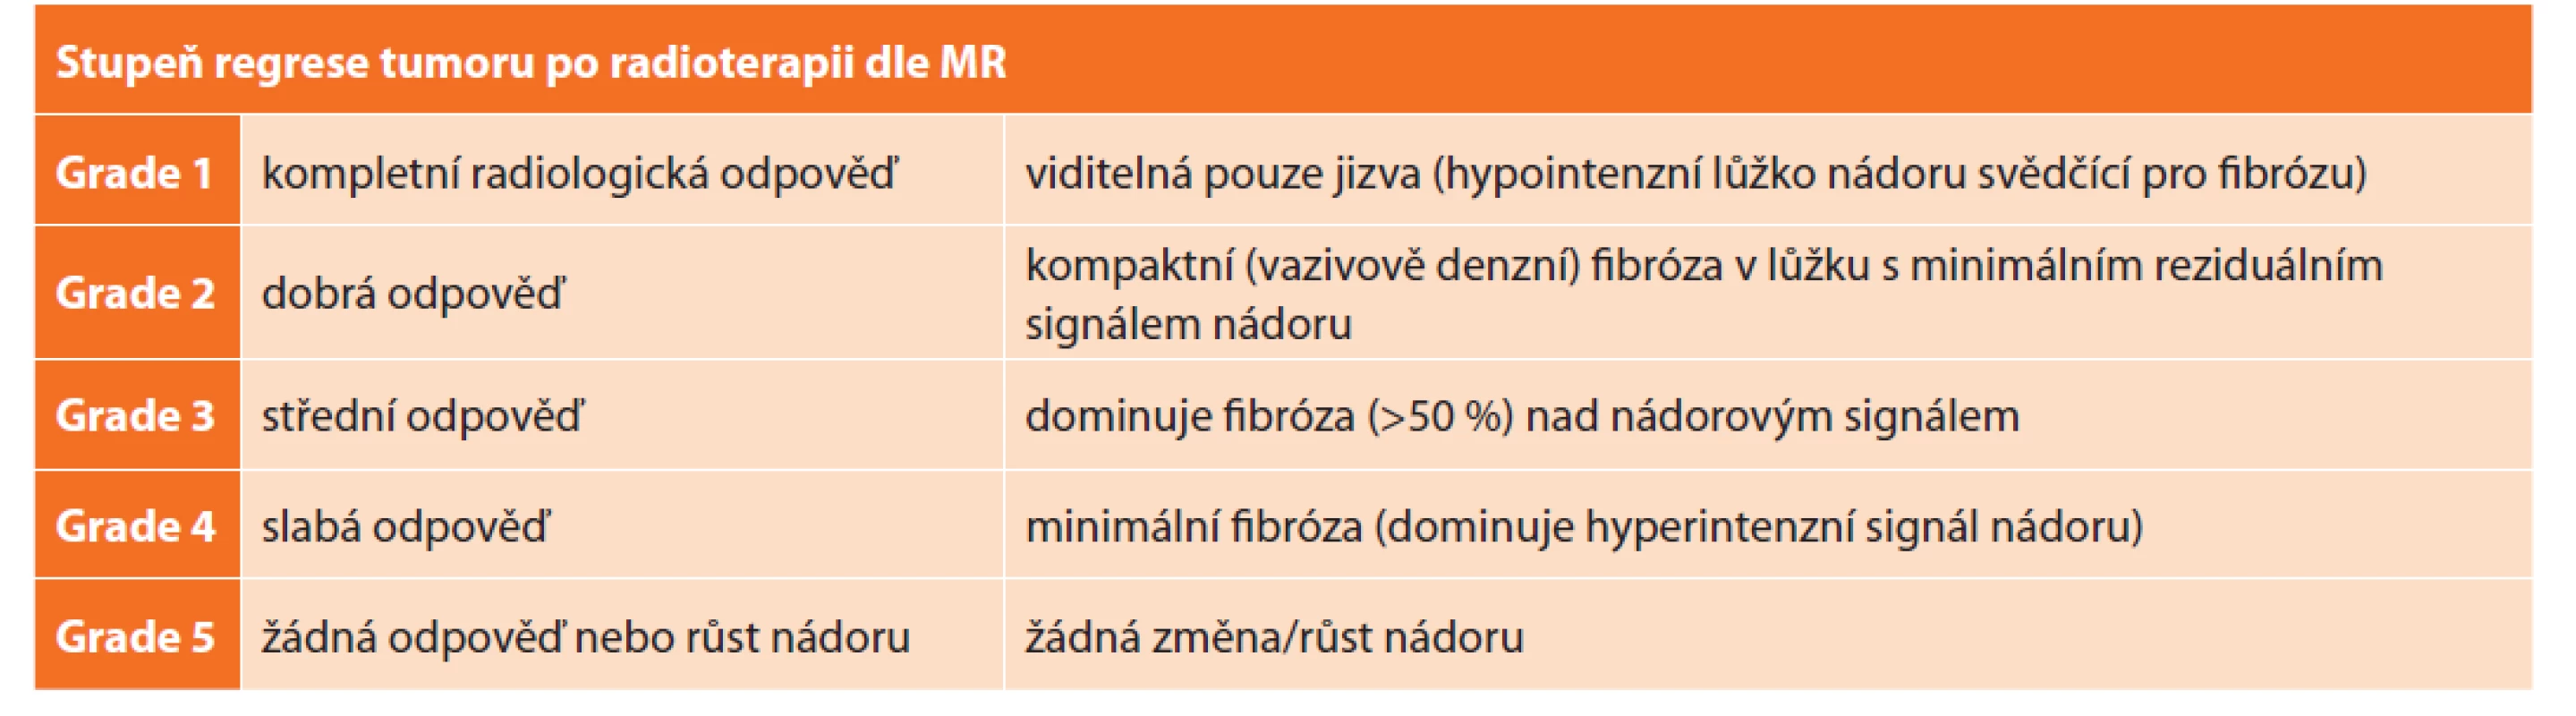 Klasifikace stupně regrese nádoru po radioterapii dle MR<br>
Tab. 1: Tumour regression grade after radiotherapy as seen on MRI